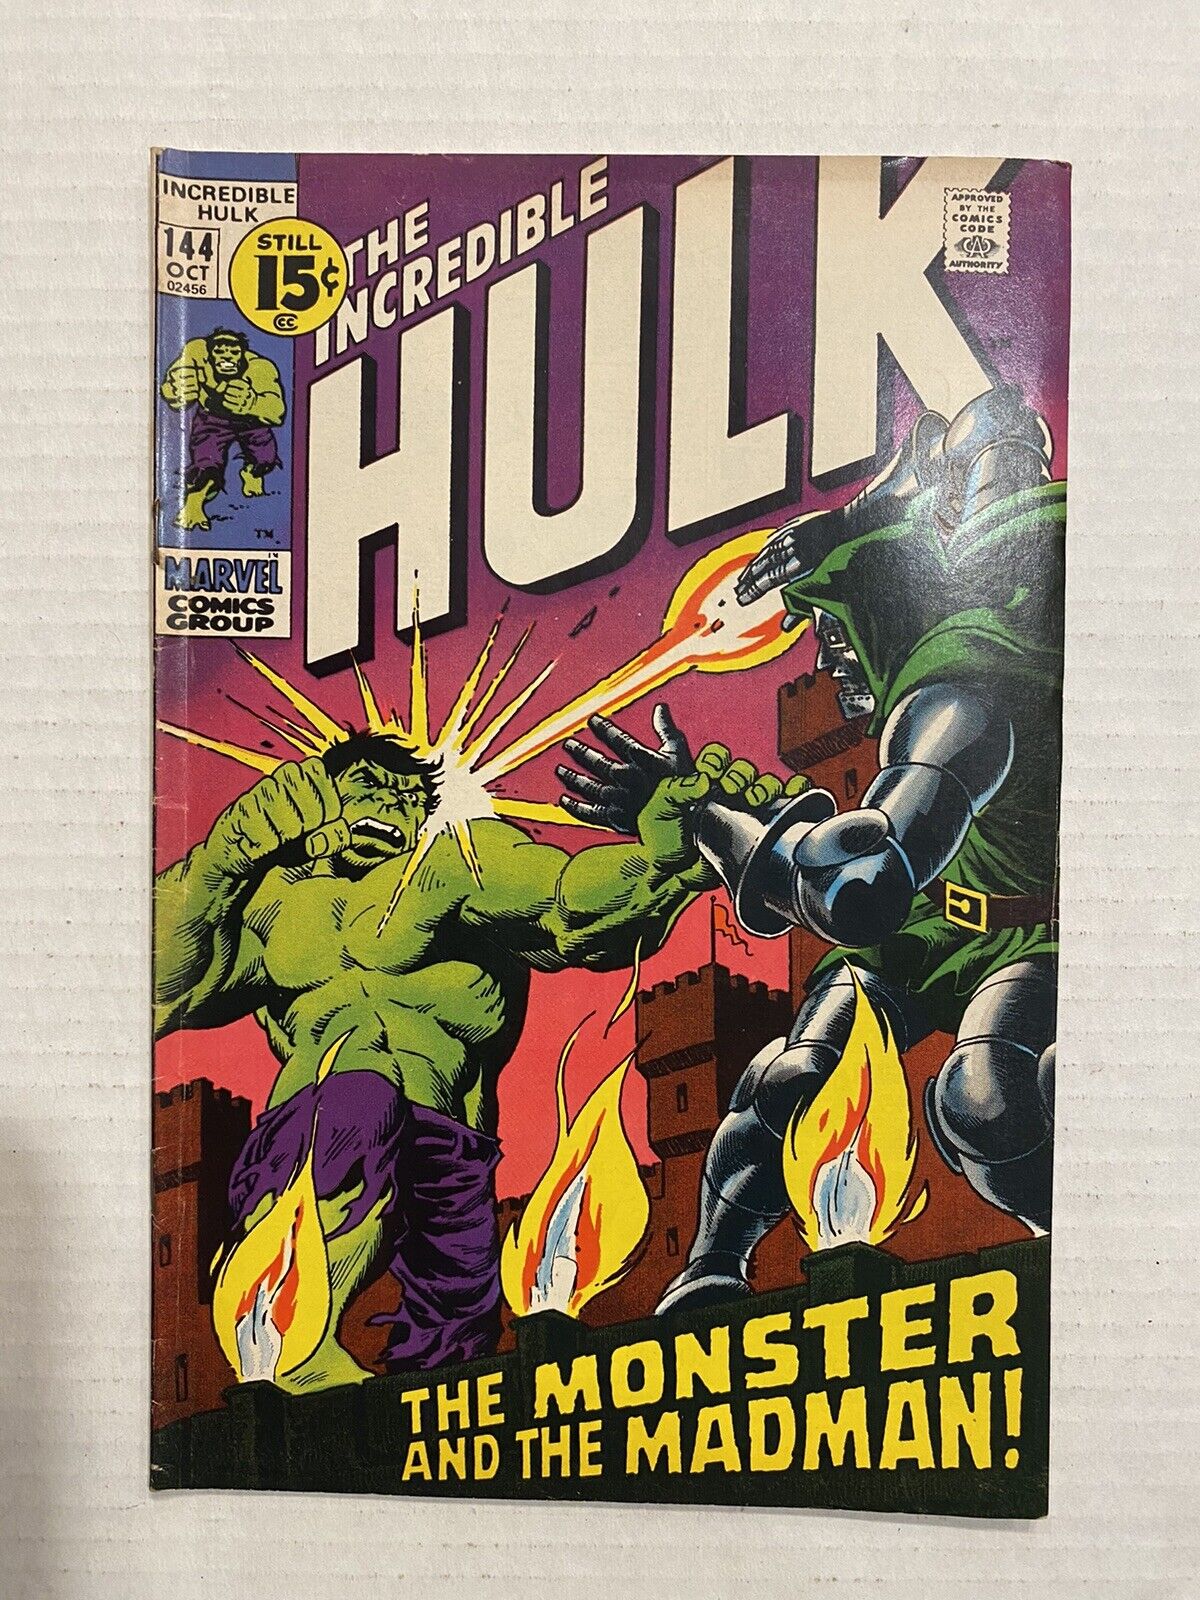 Incredible Hulk #144 - Monster & The Mad Man 1971 -Dr. Doom-